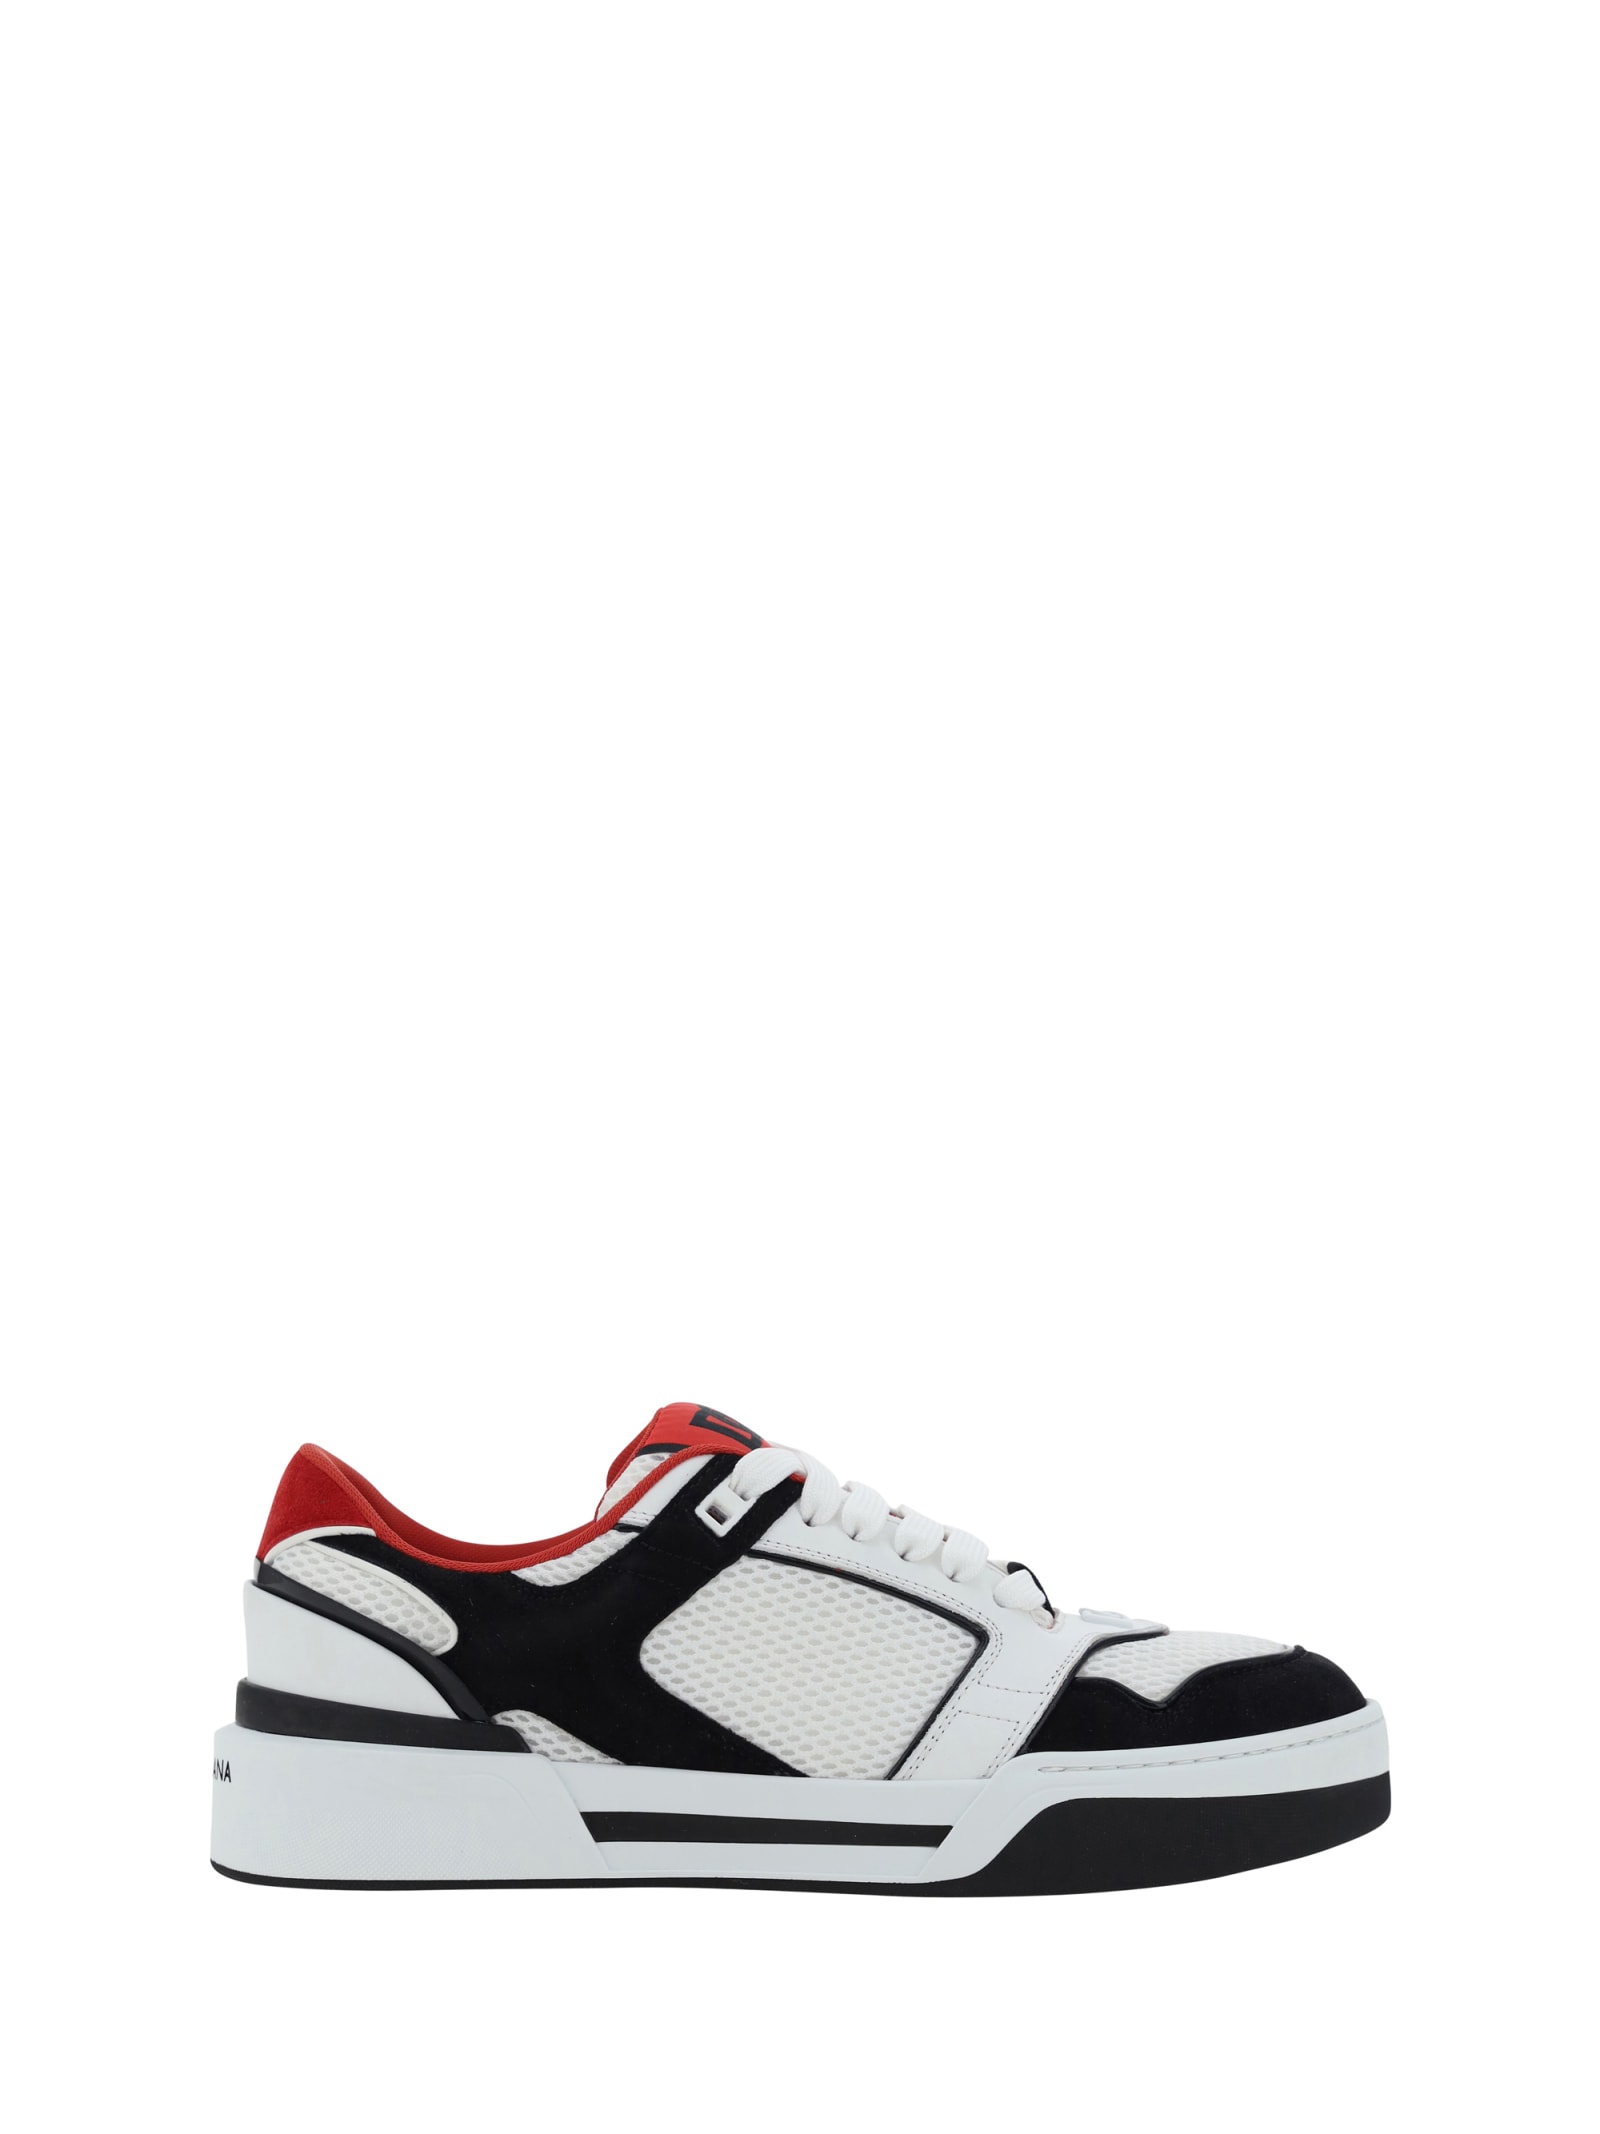 Shop Dolce & Gabbana Sneakers In Bianco/nero/rosso